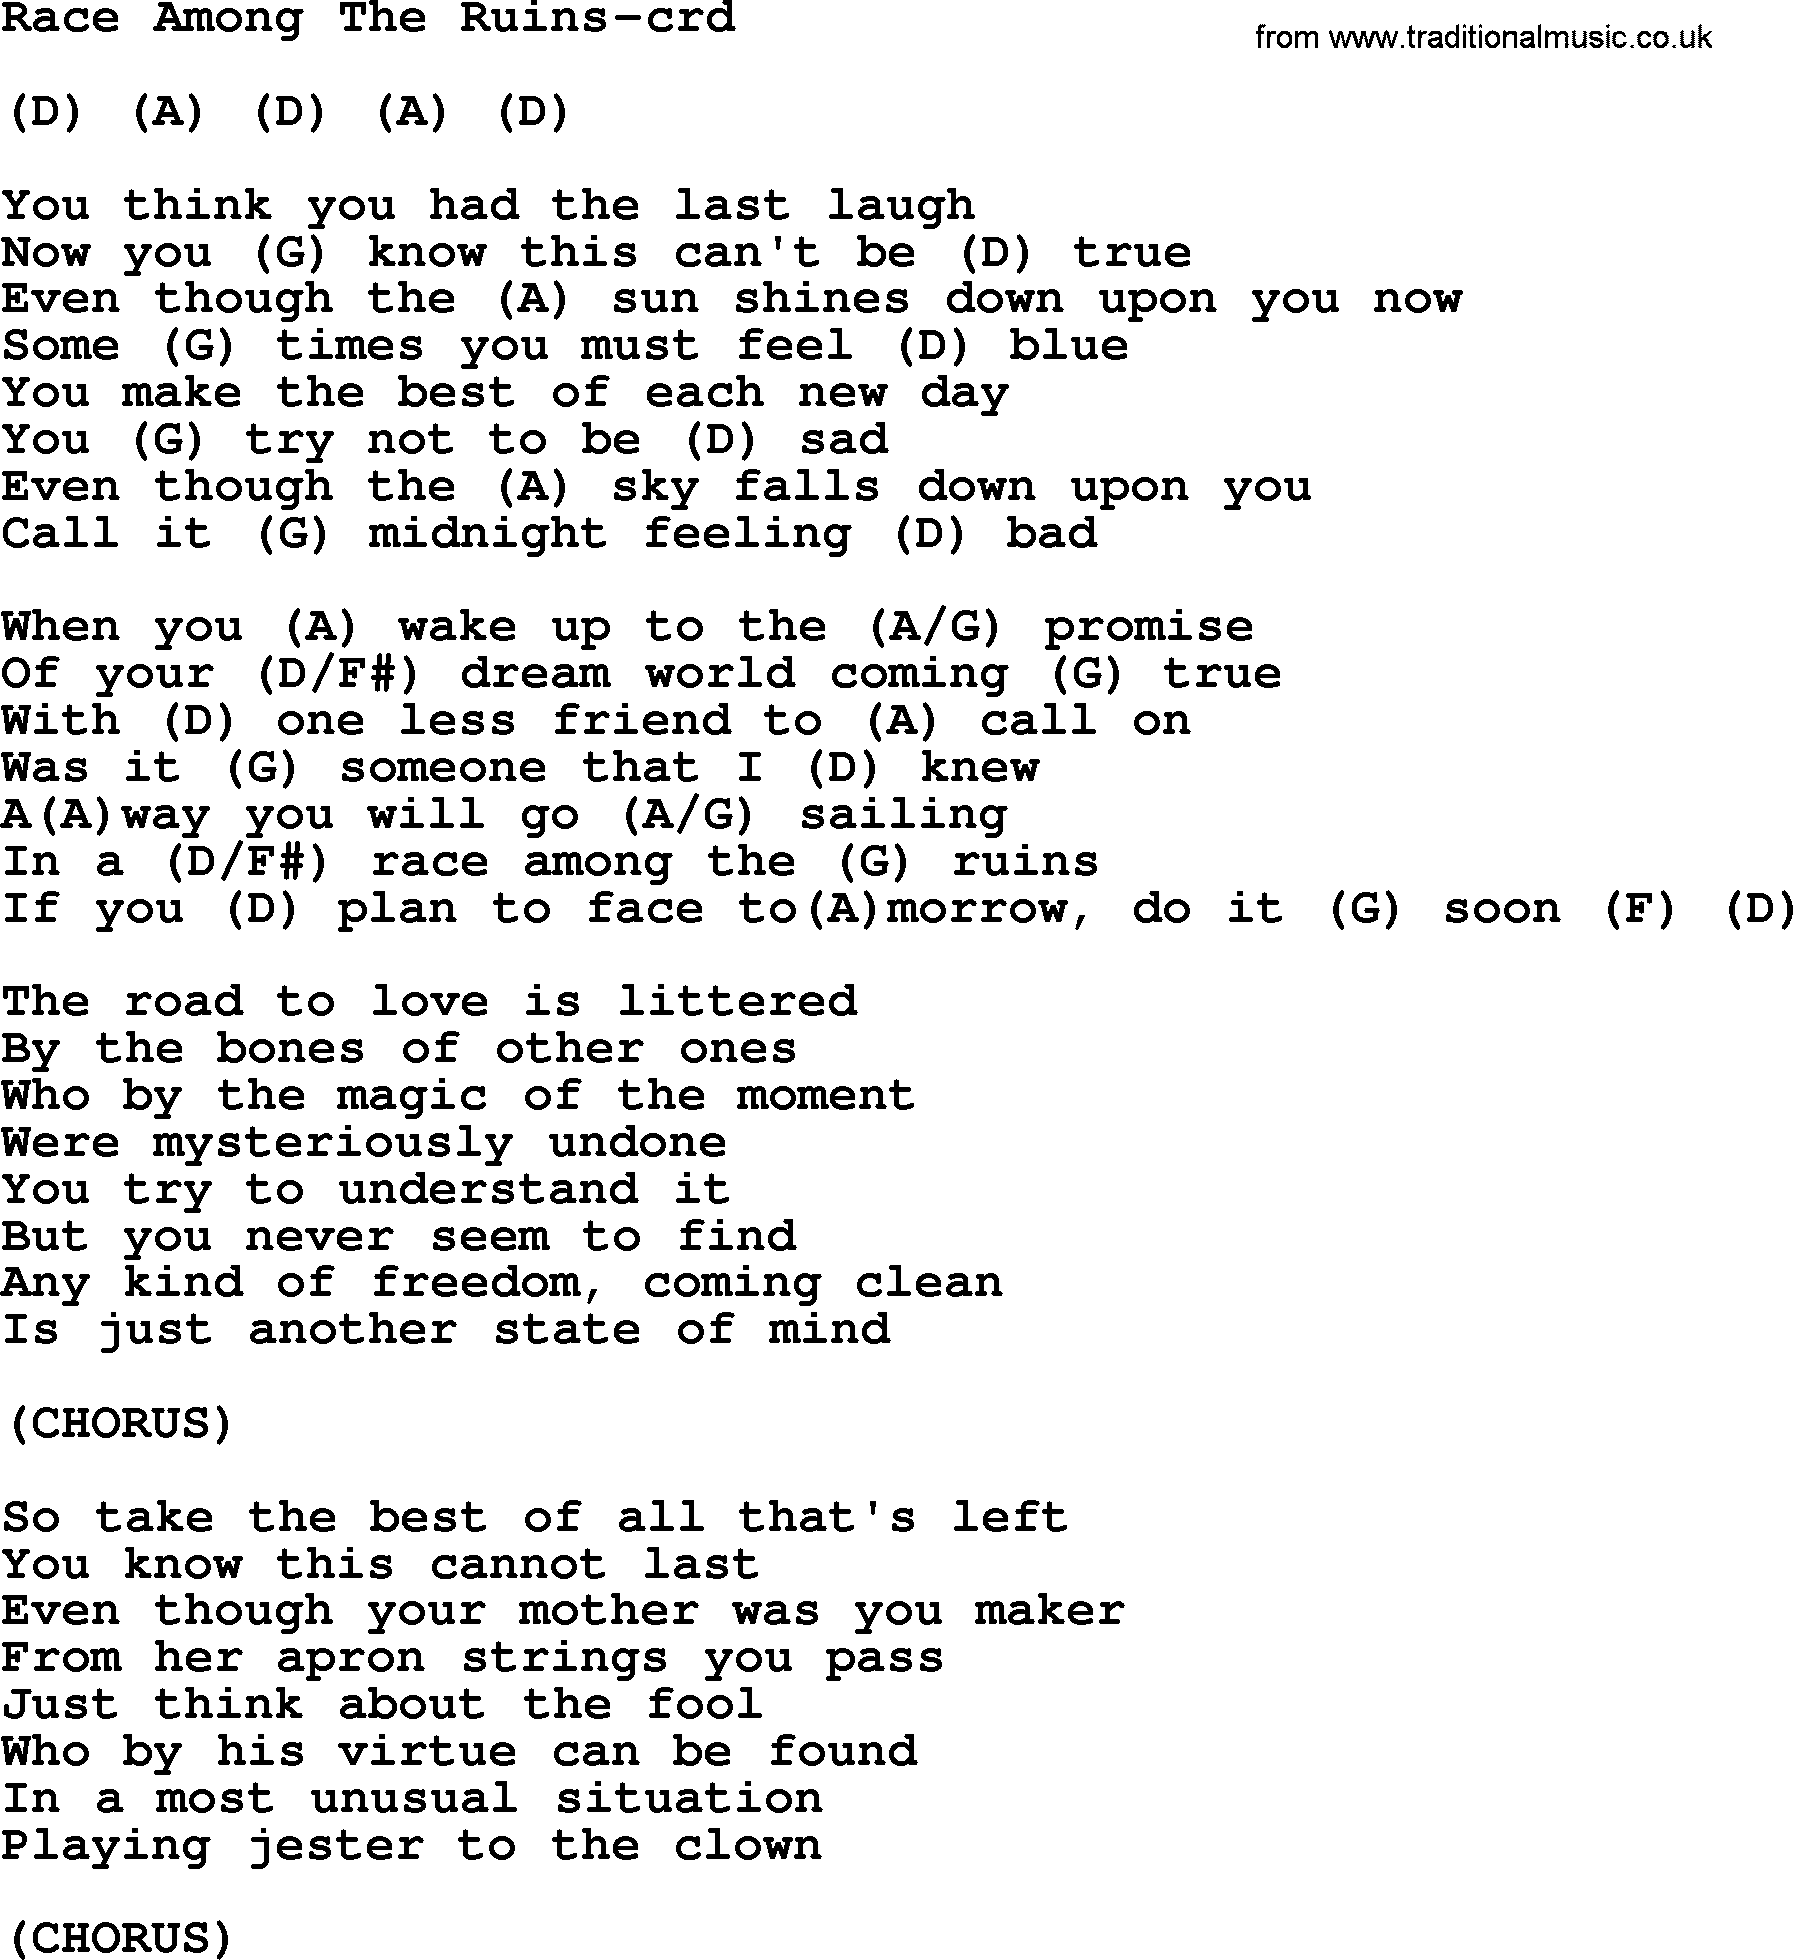 Gordon Lightfoot song Race Among The Ruins, lyrics and chords